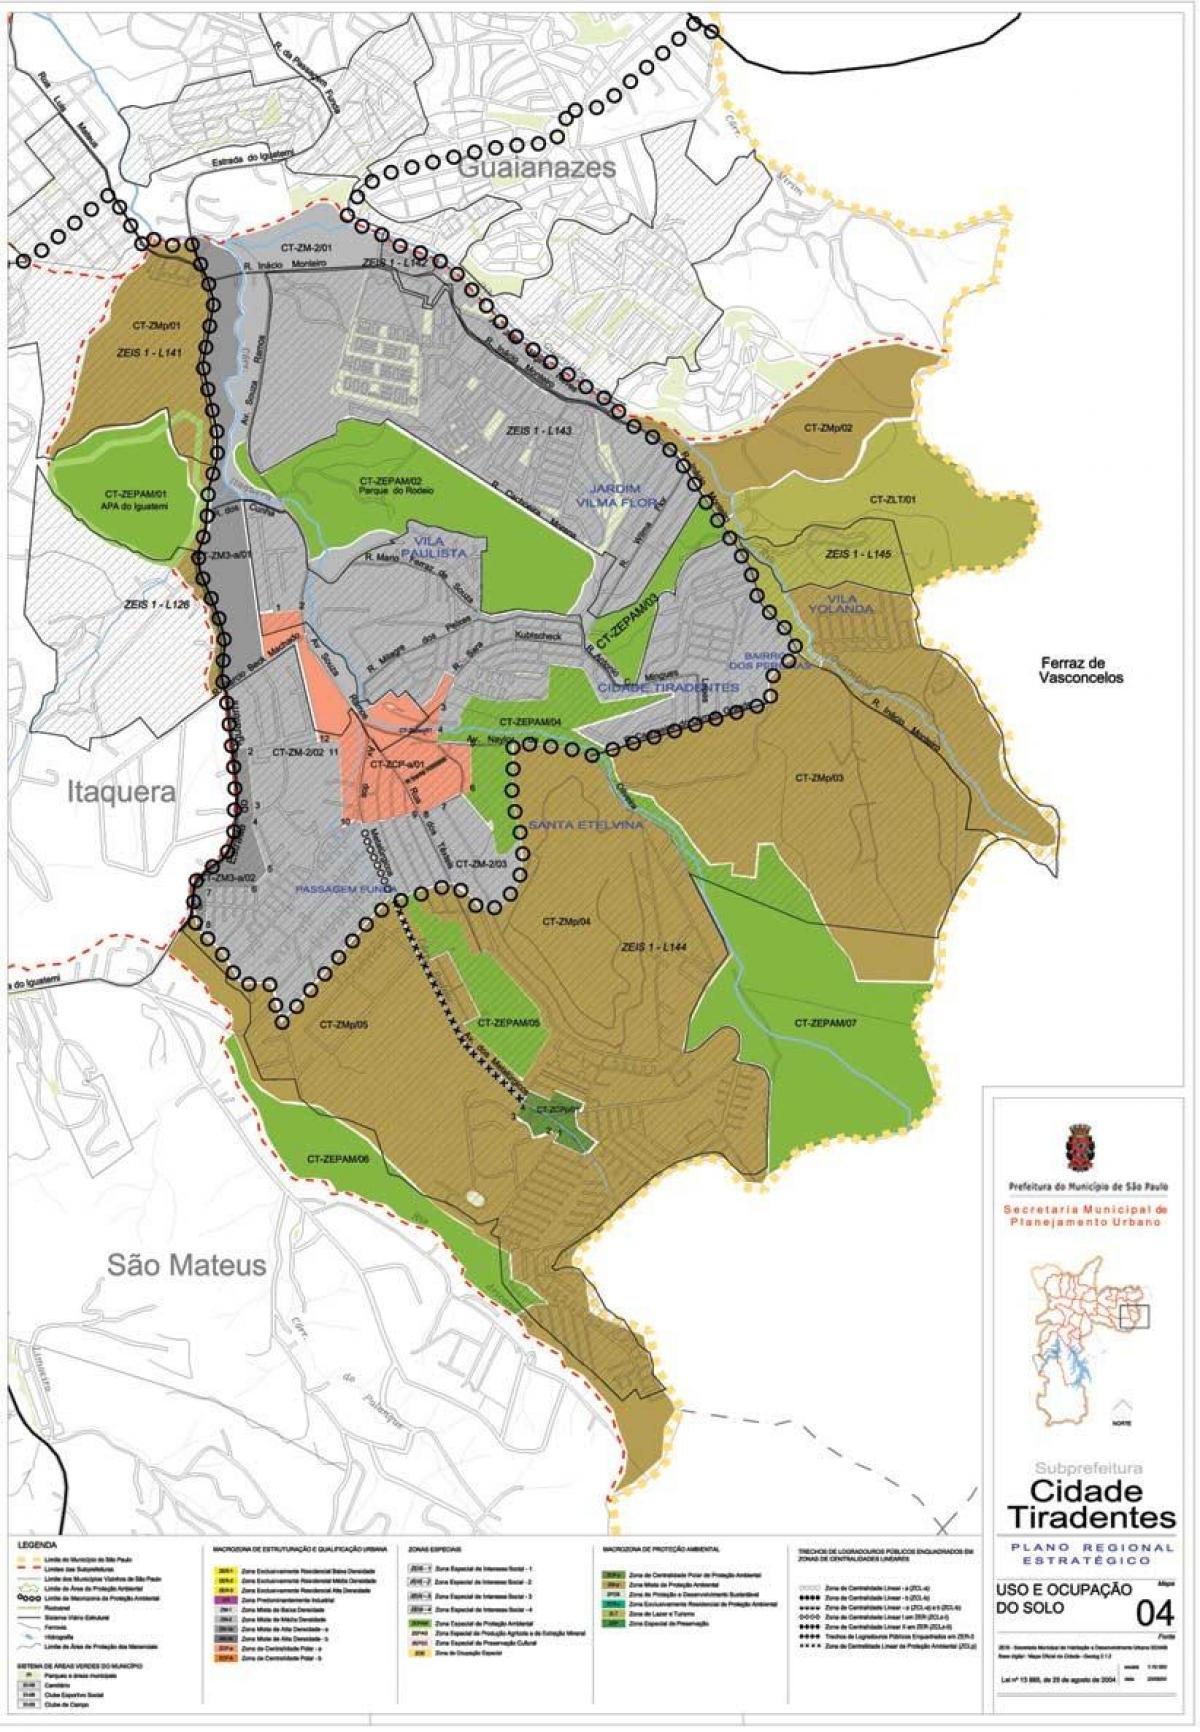 Mapa Cidade Tiradentes São Paulo - lurzoruaren Okupazioa